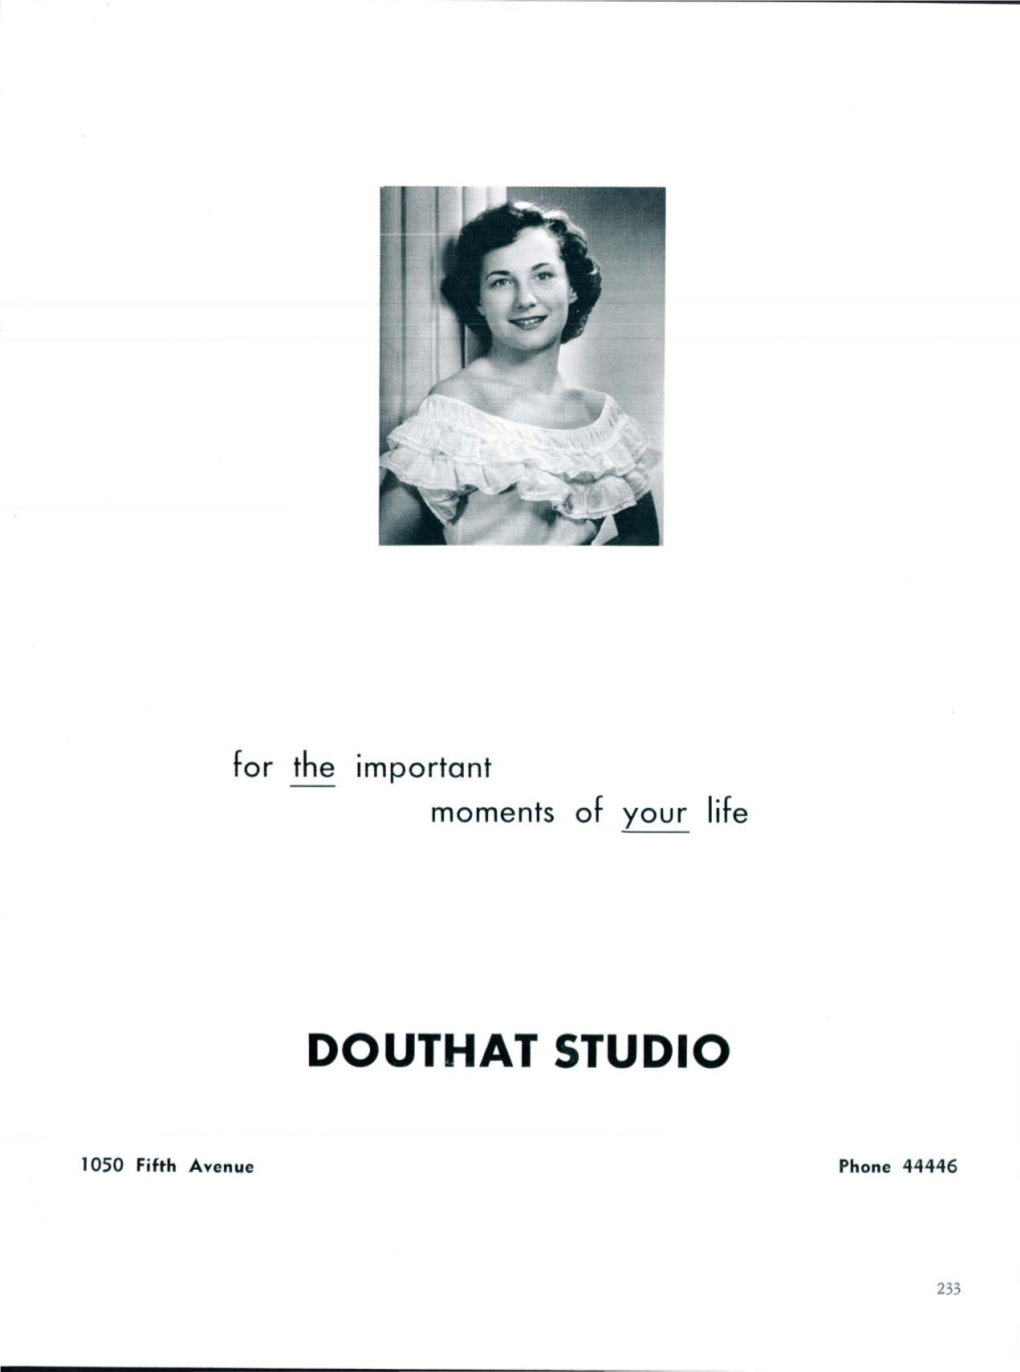 Douthat Studio